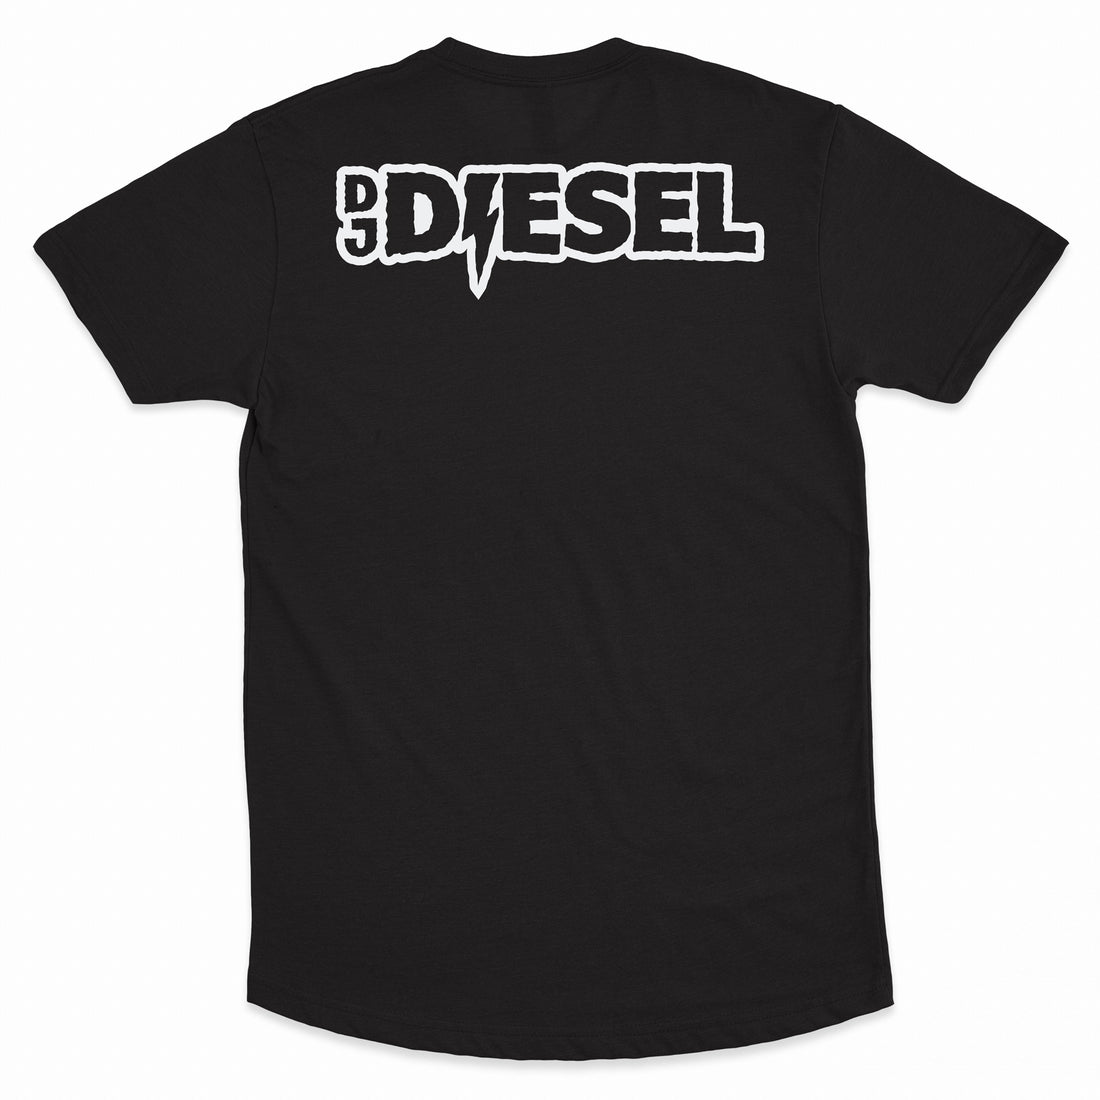 DJ DIESEL - Bass Driver - Long Tee - Black